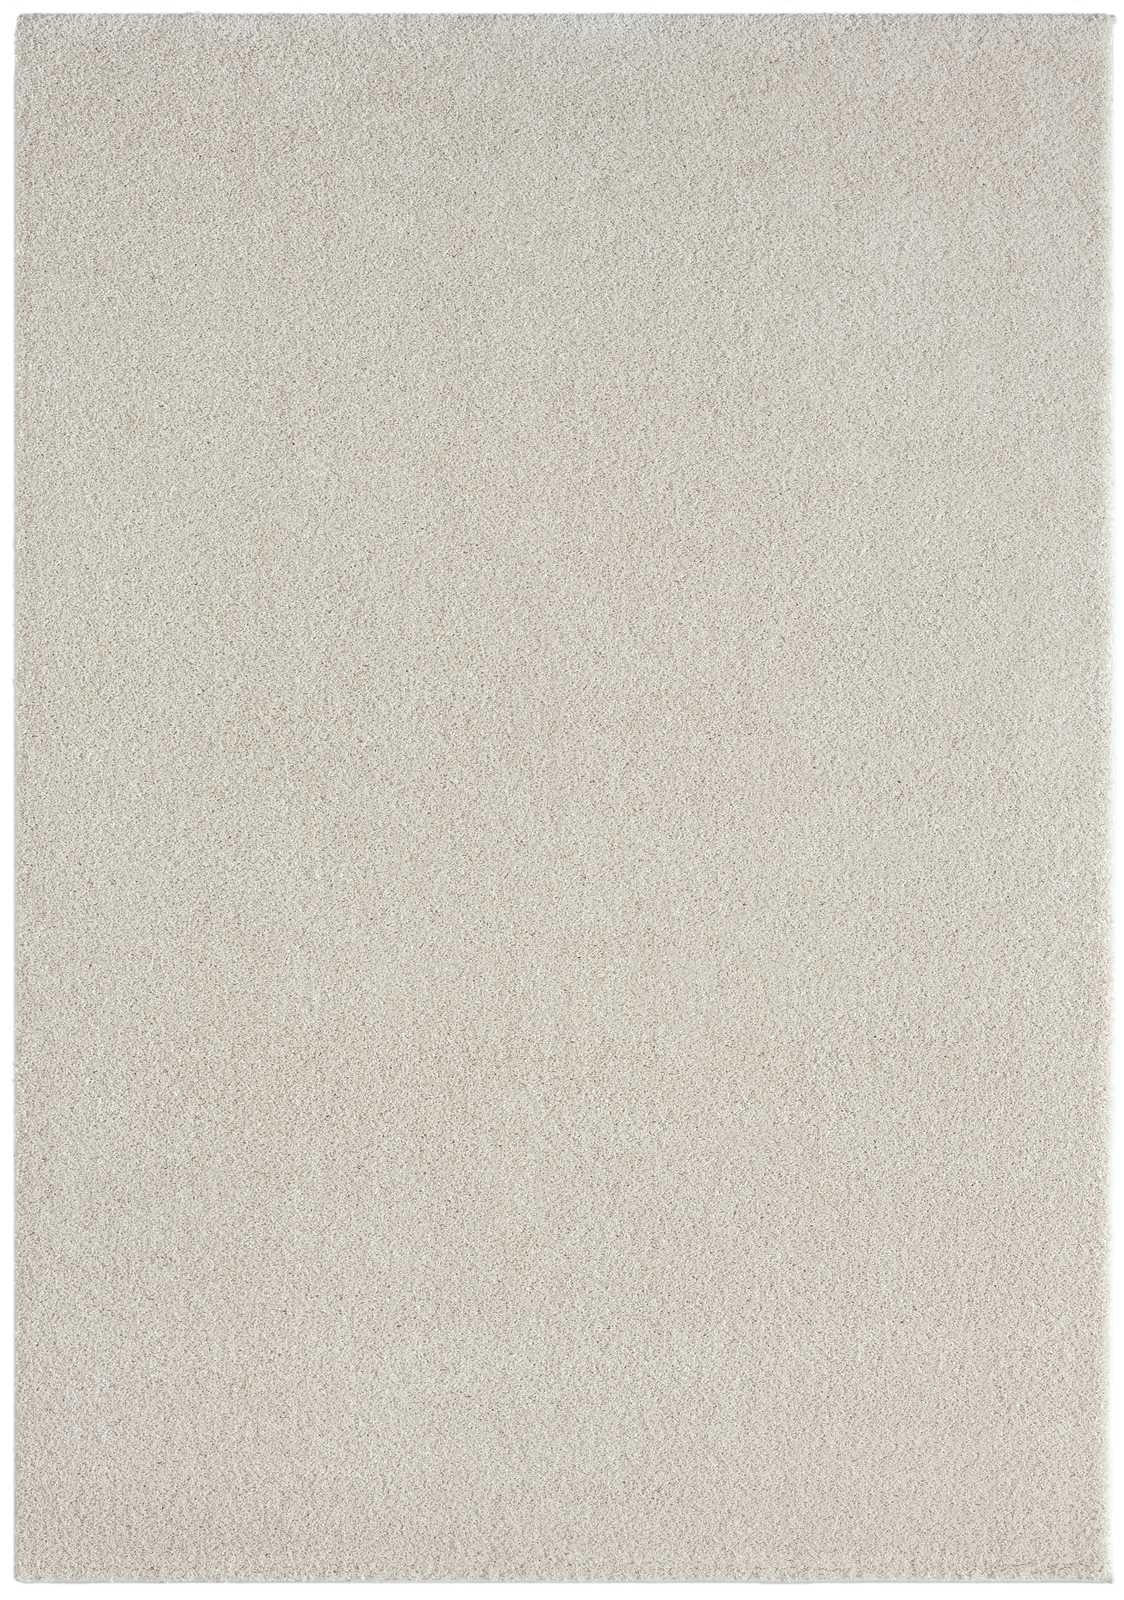             Crème kortpolig vloerkleed - 230 x 160 cm
        